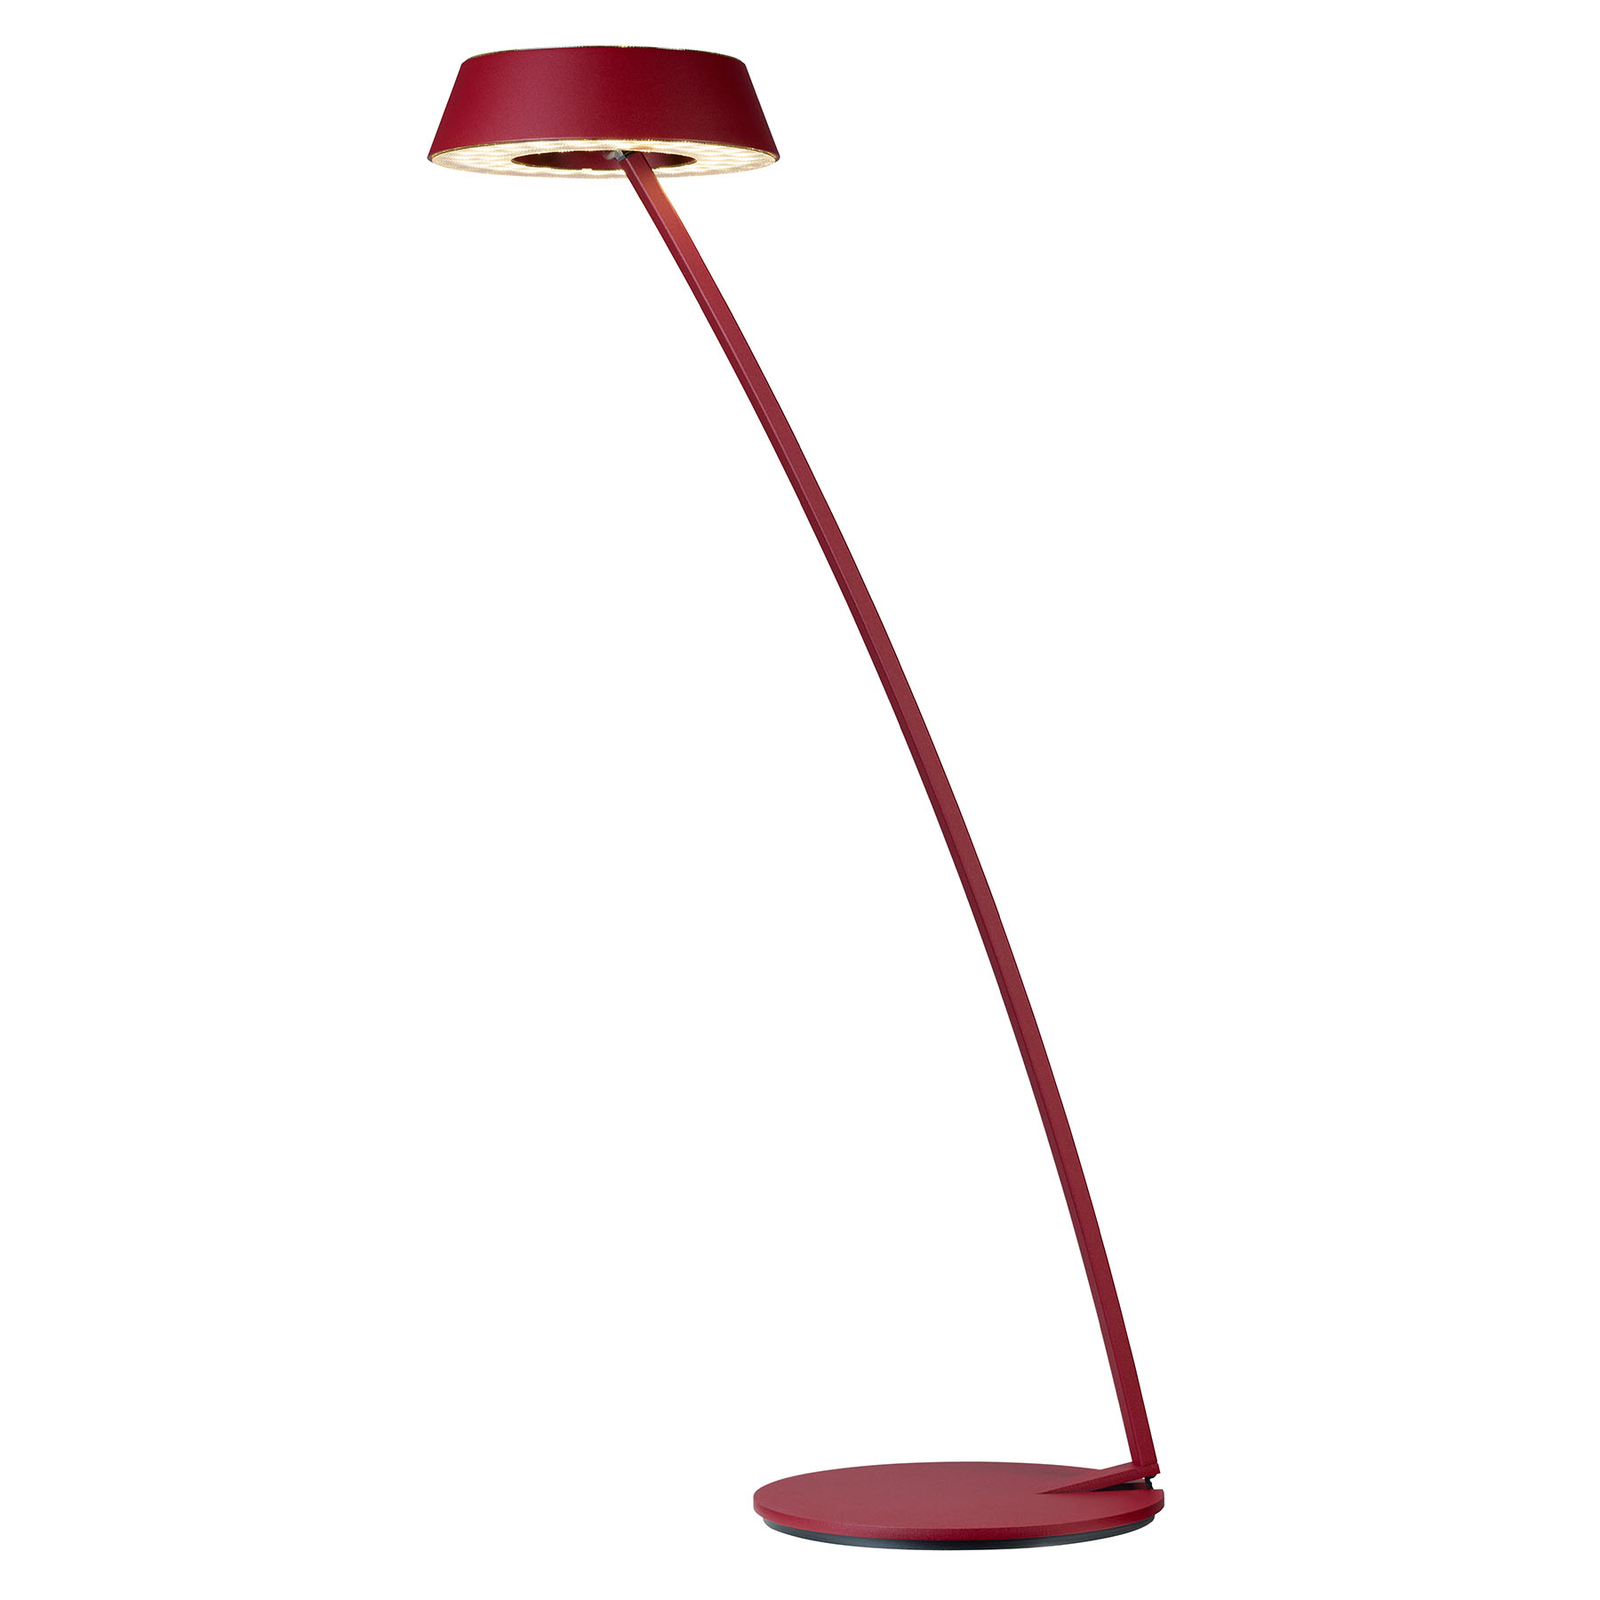 OLIGO Glance lampe à poser LED arquée rouge mate